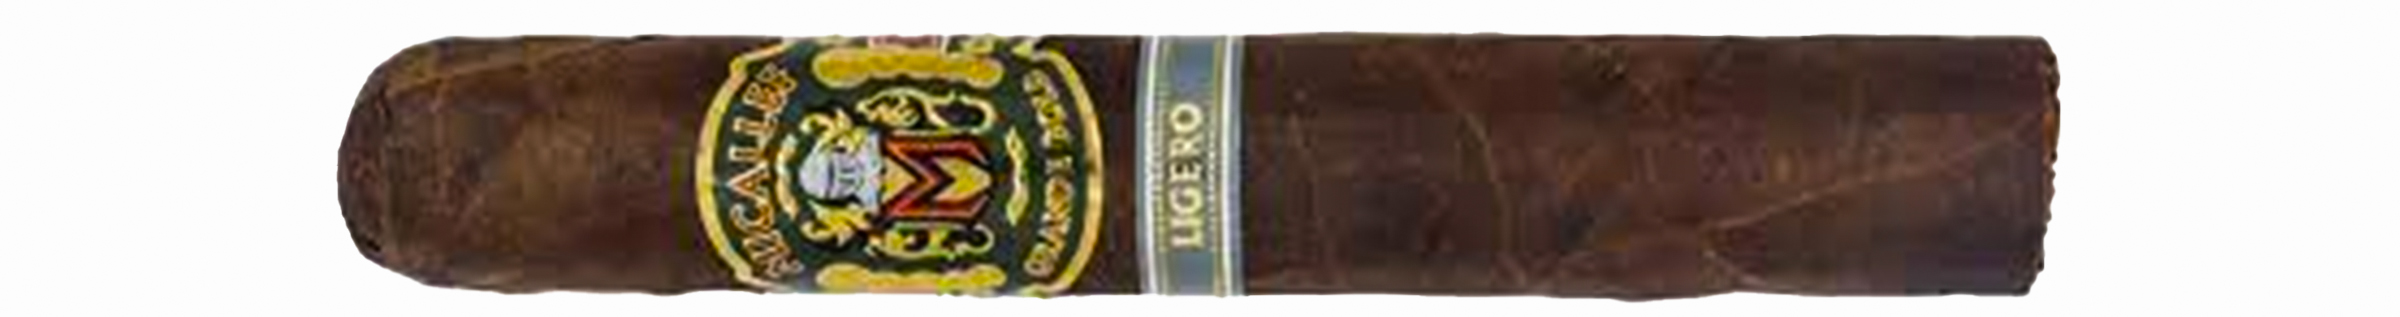 A cigar with Micallef Grande Bold Ligero label